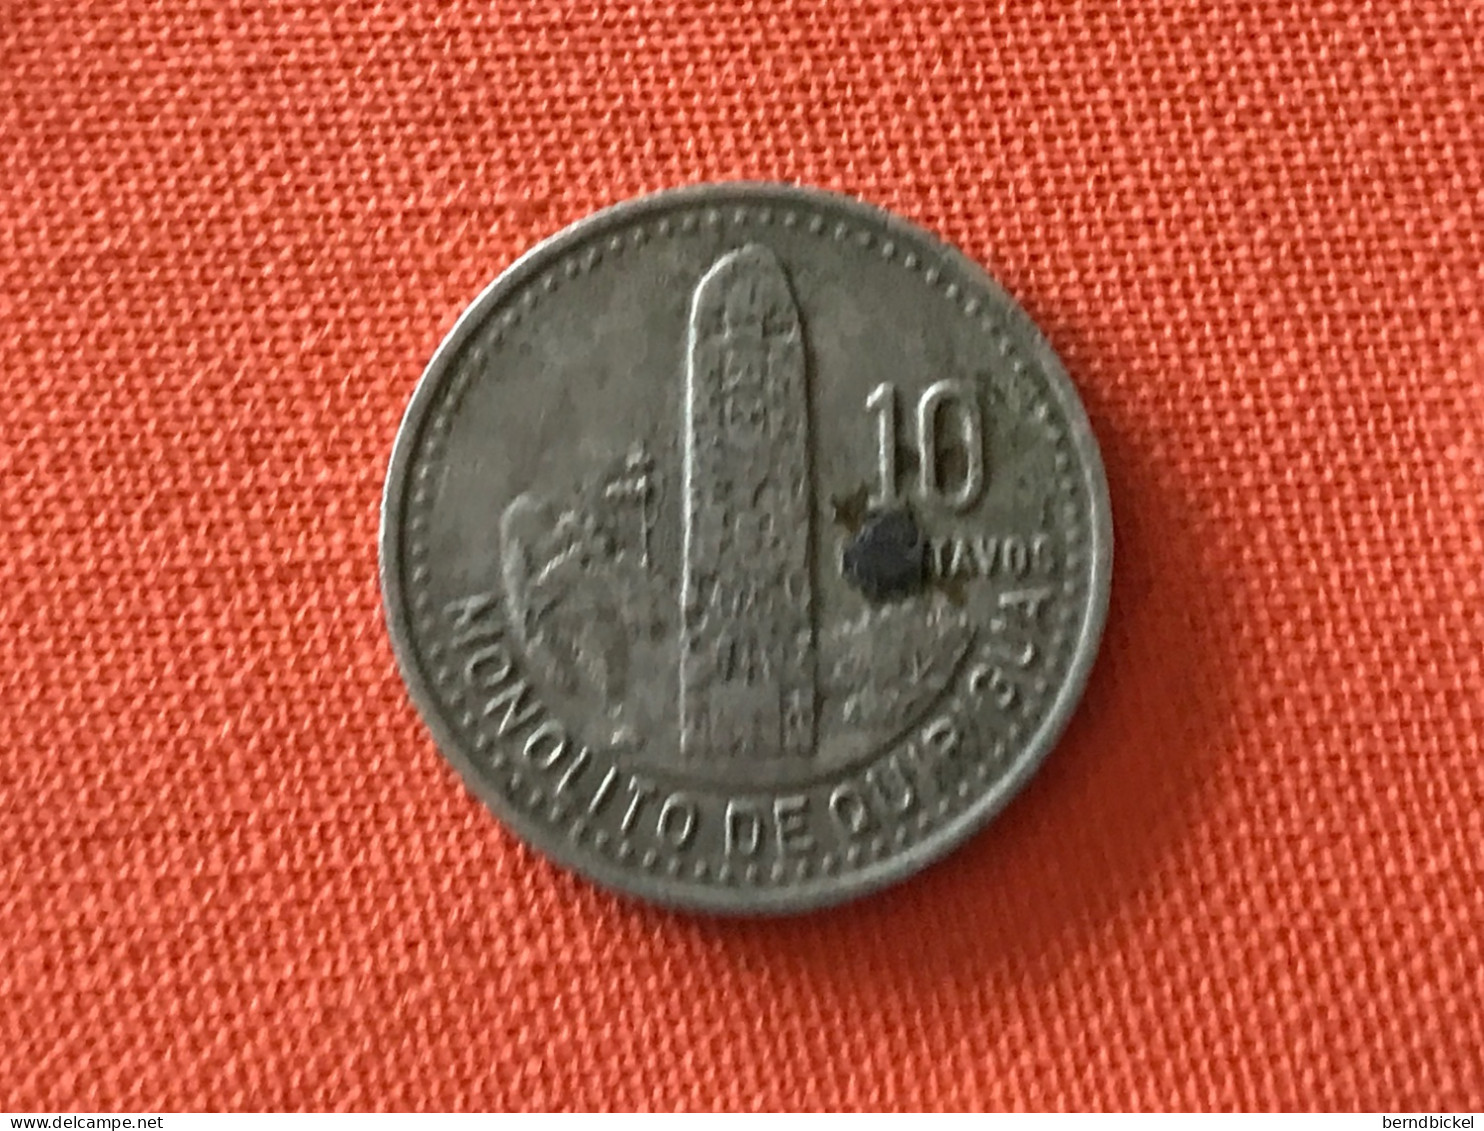 Münze Münzen Umlaufmünze Guatemala 10 Centavos 1991 - Guatemala